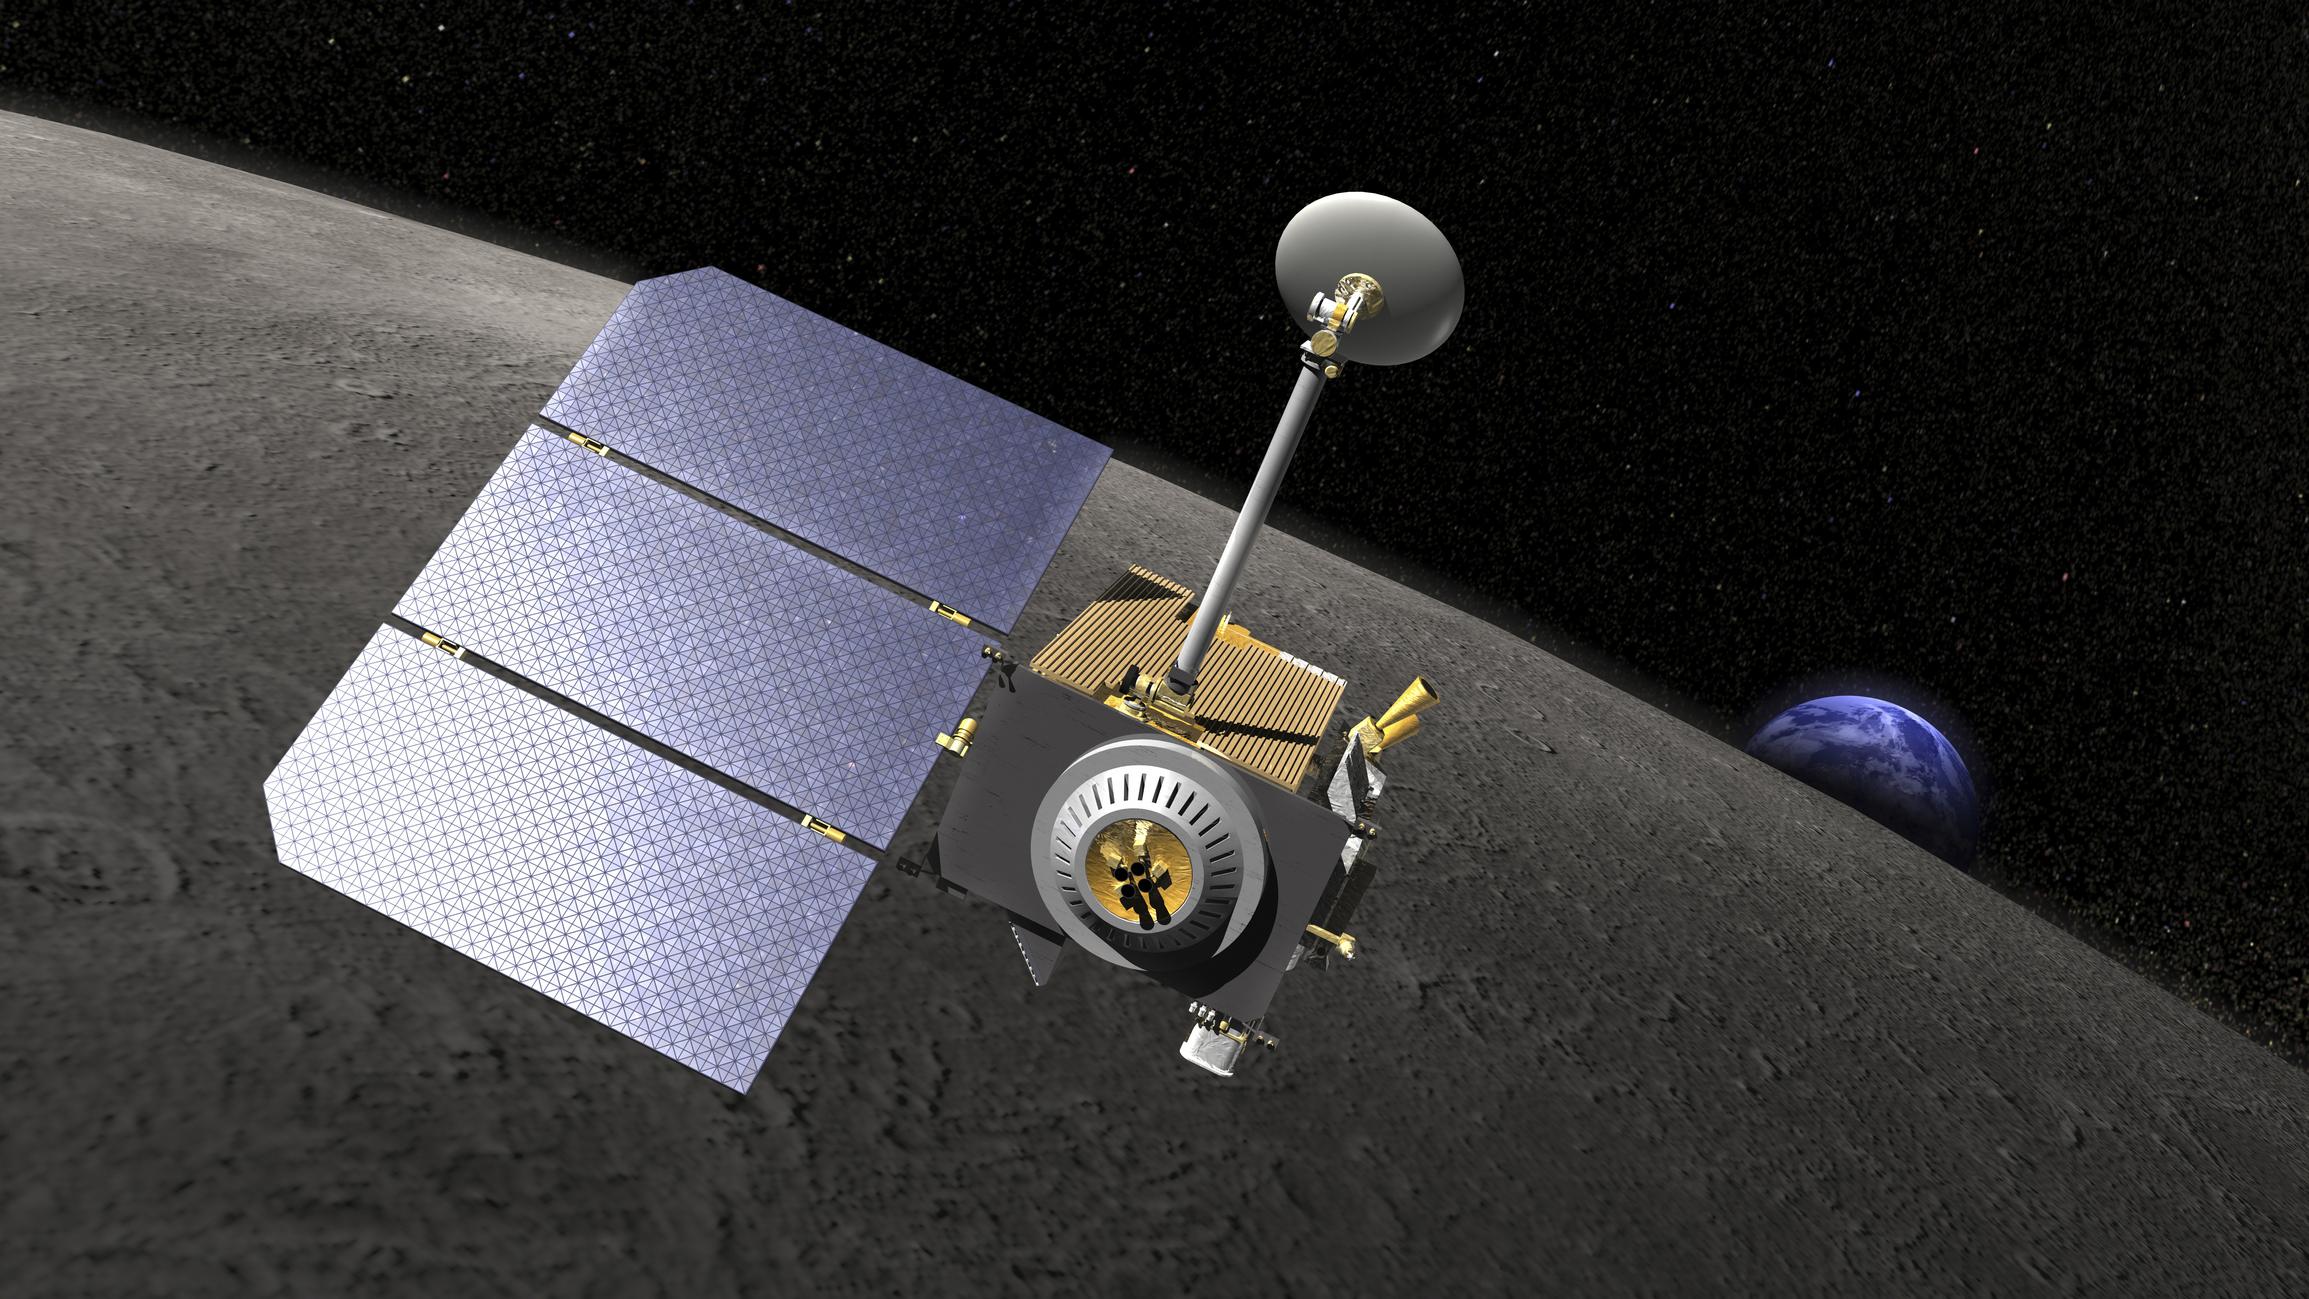 The Lunar Reconnaissance Orbiter is a NASA spacecraft.